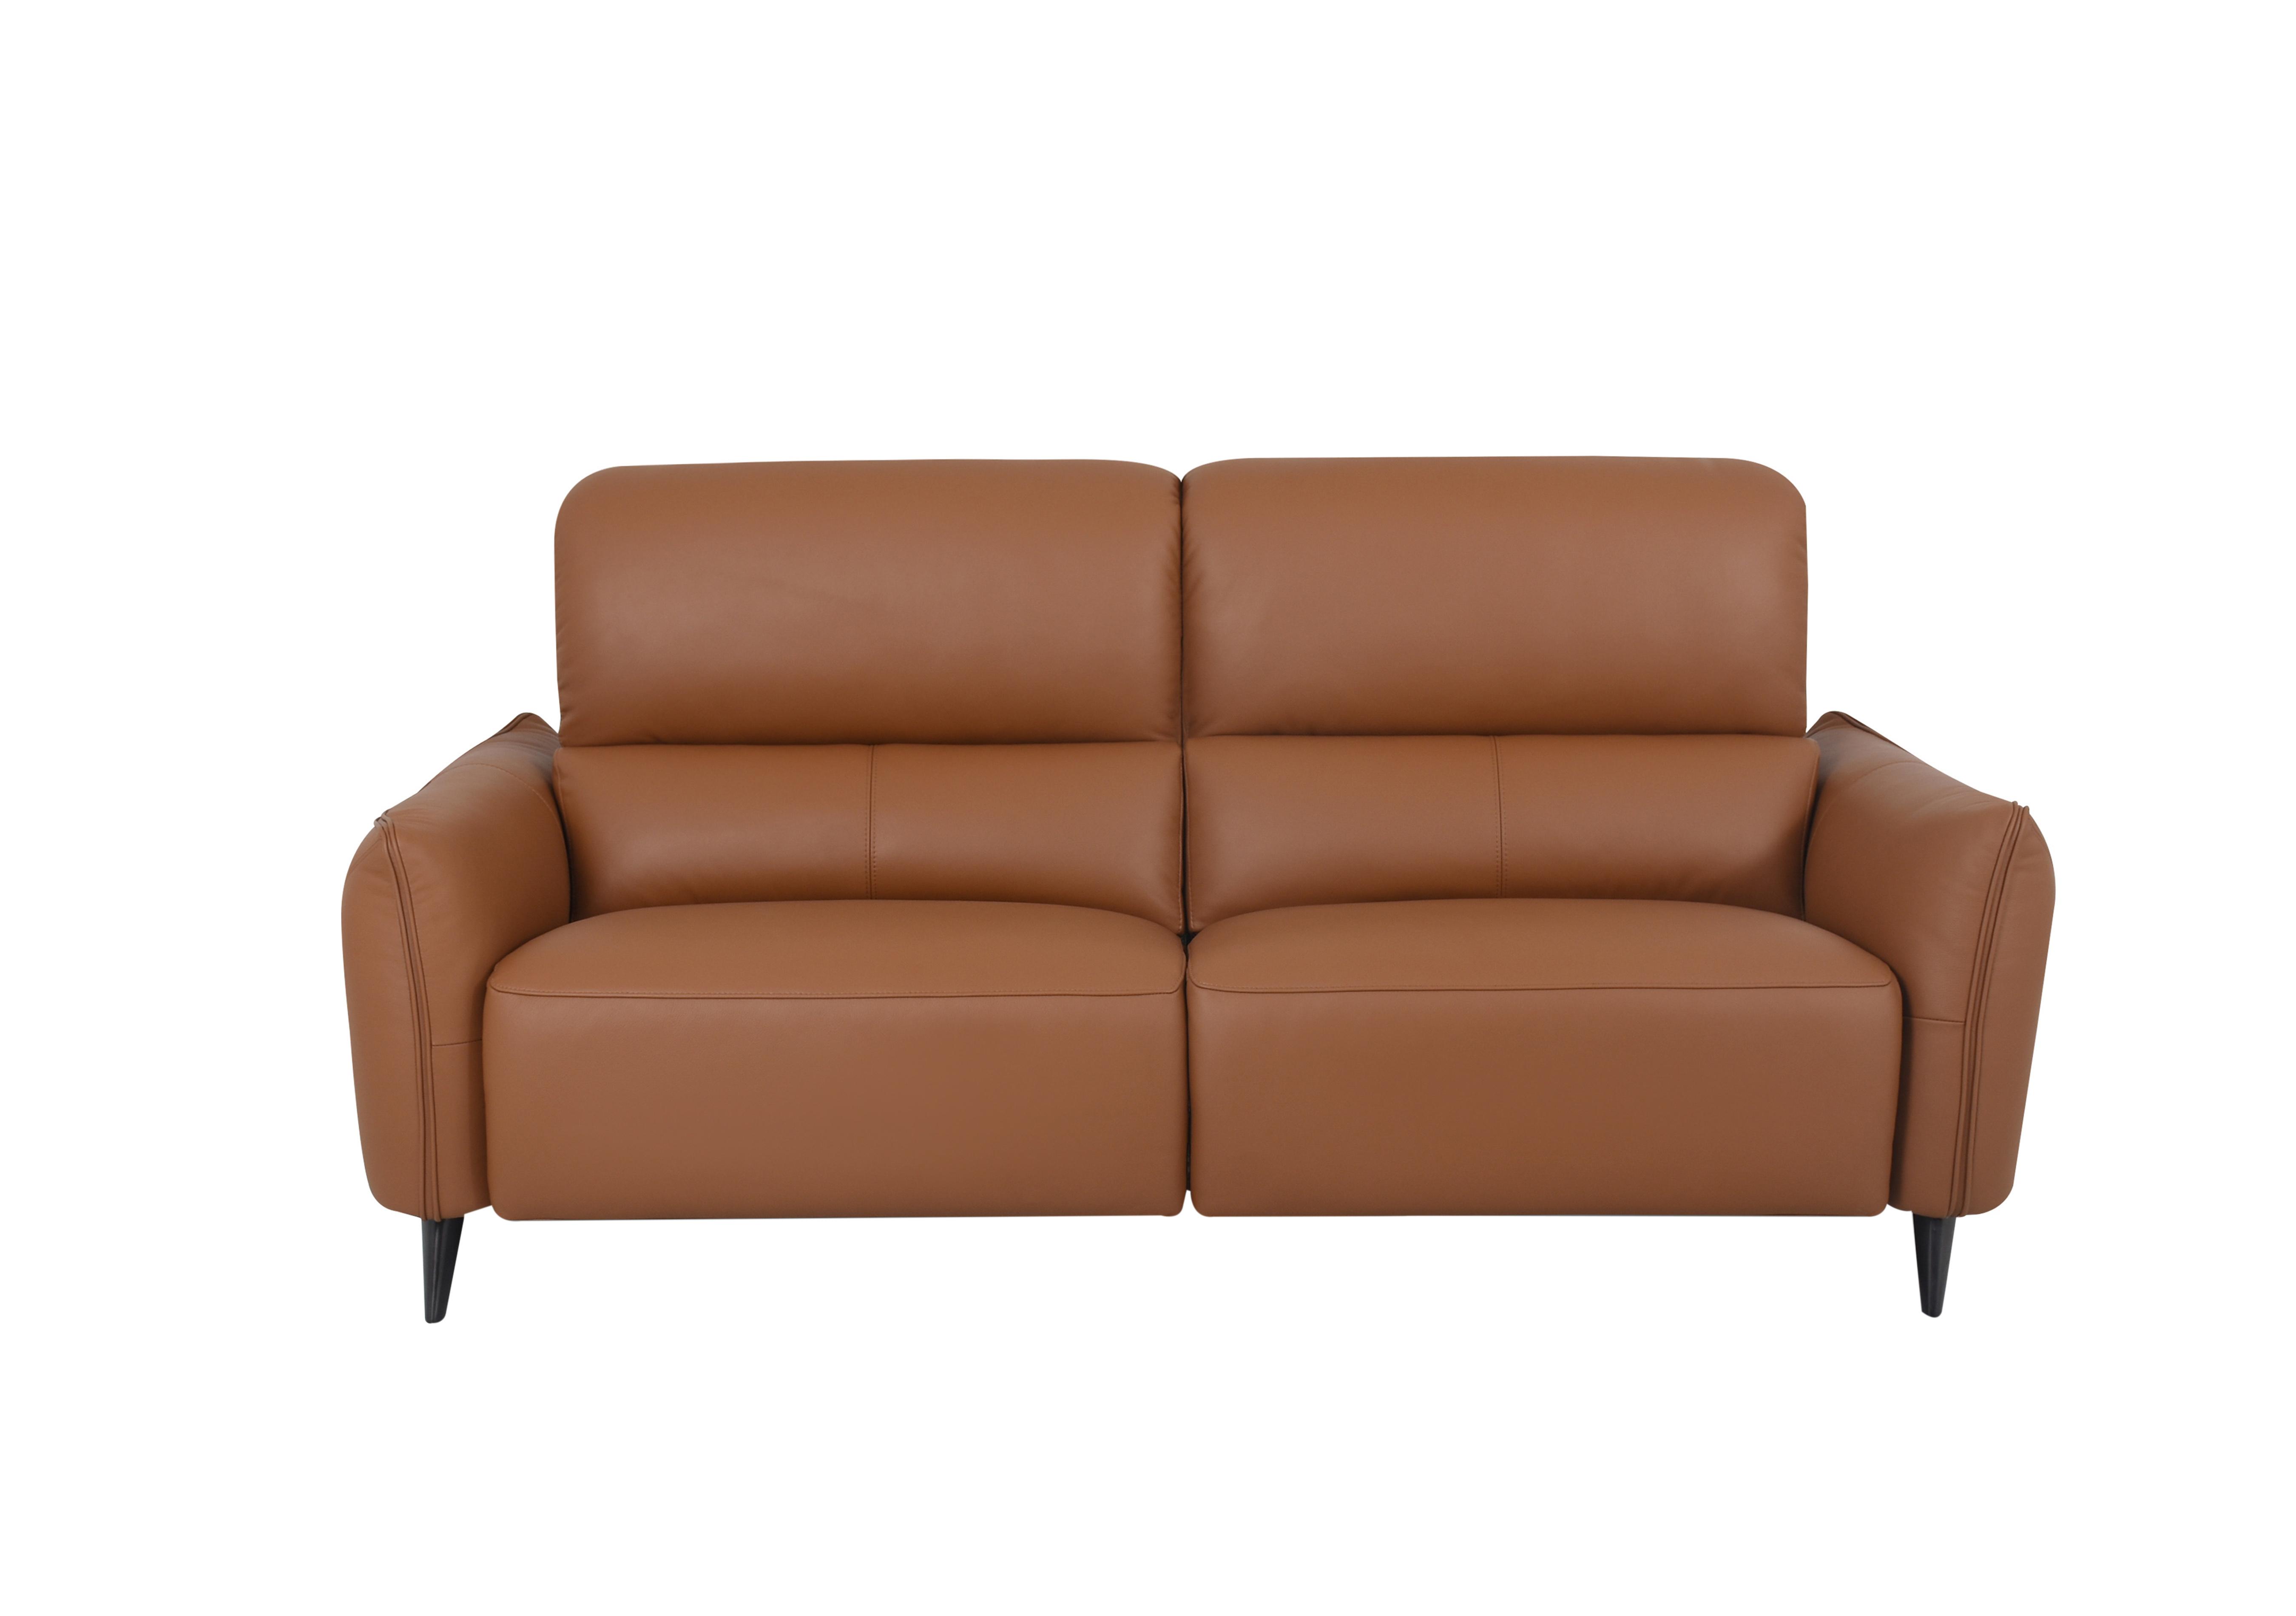 Maddox 3 Seater Leather Sofa in Nn-575e Caramel on Furniture Village